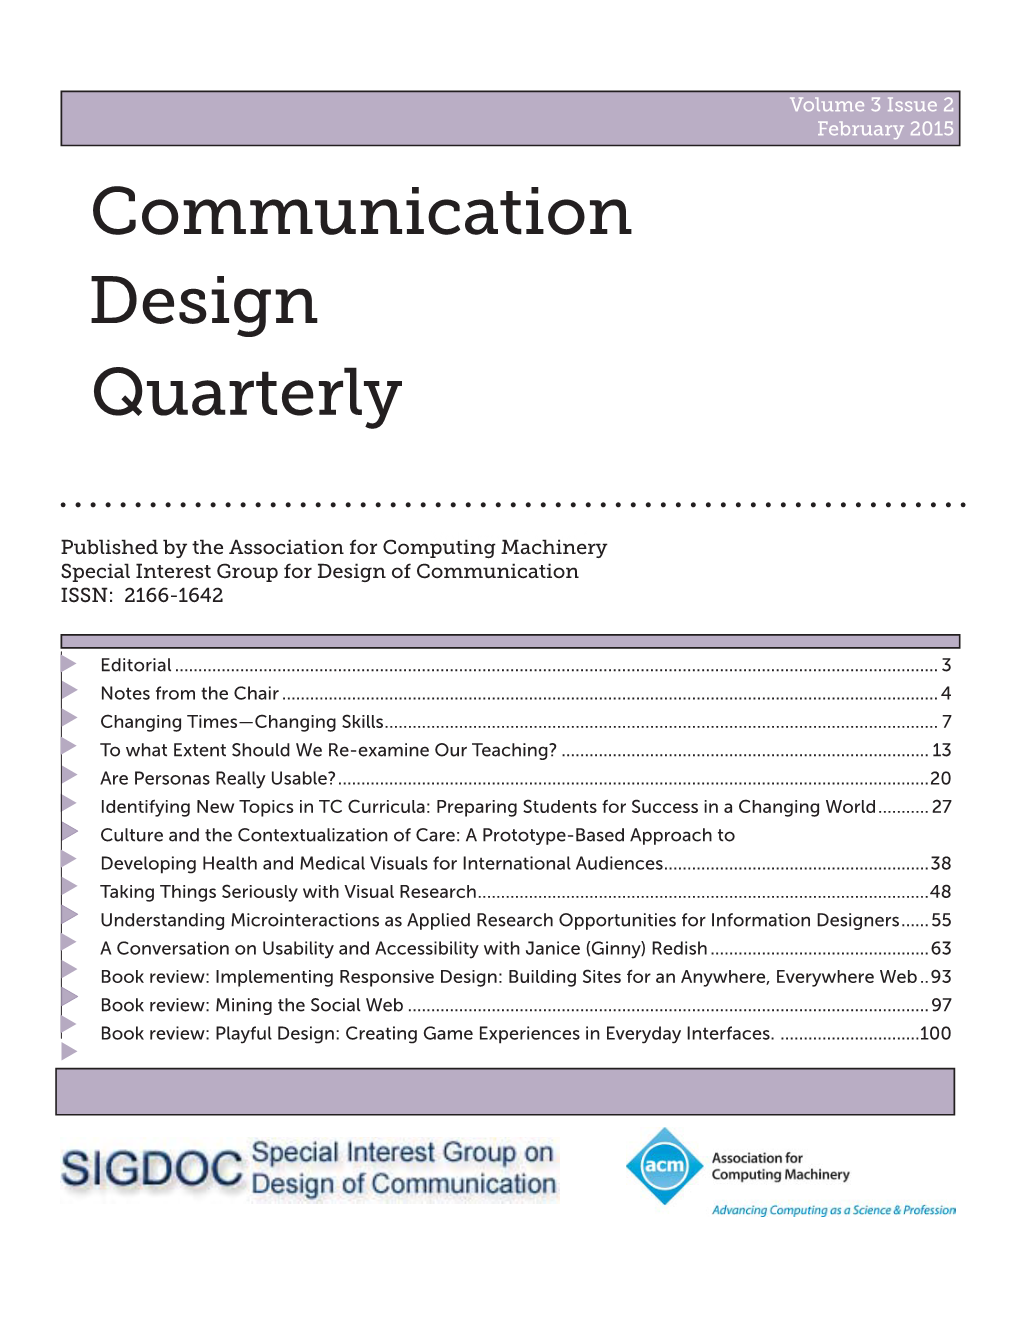 Communication Design Quarterly